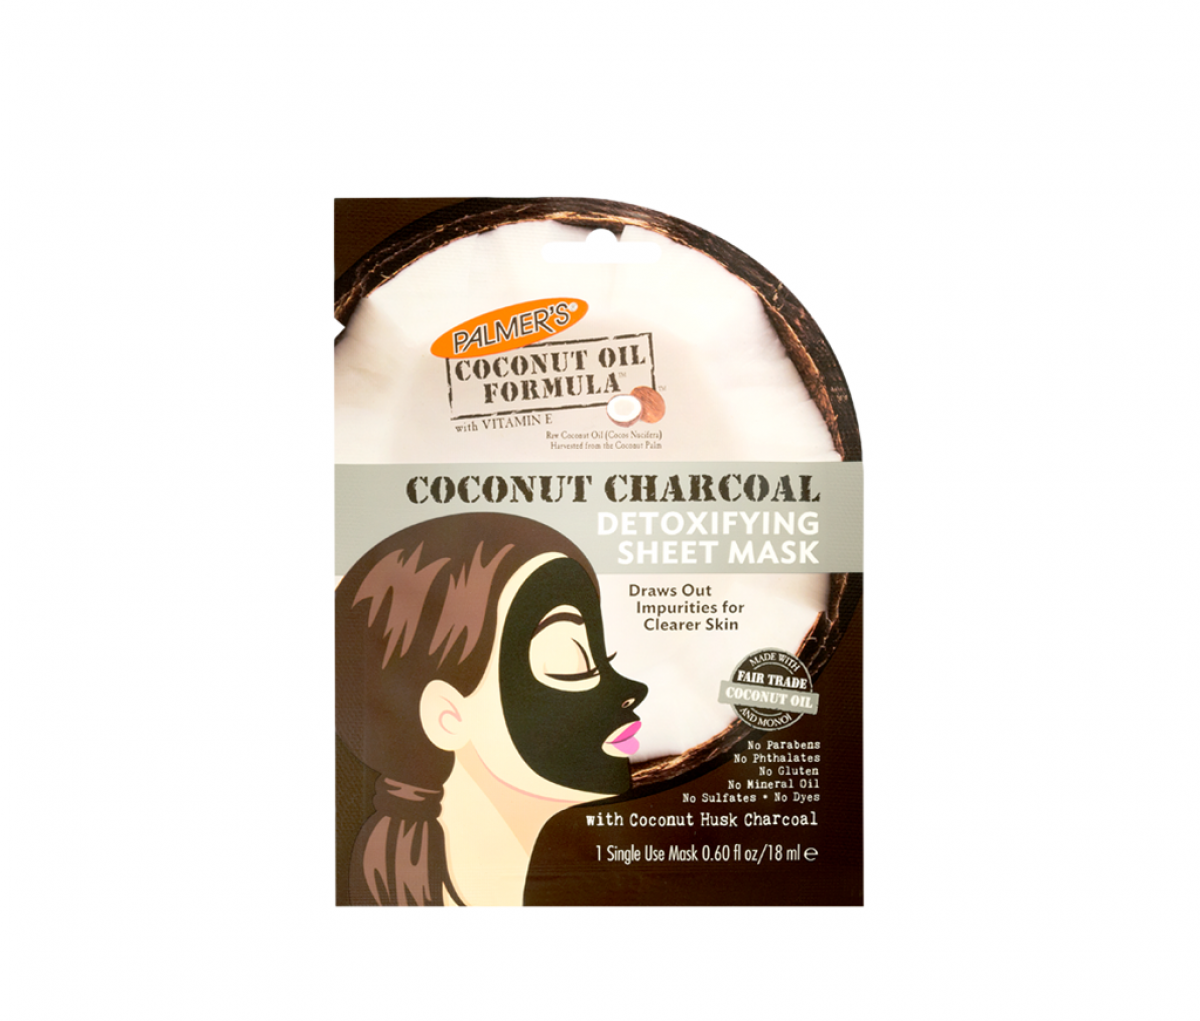 Palmers Coconut Oil Formula Charcoal Sheet Mask 